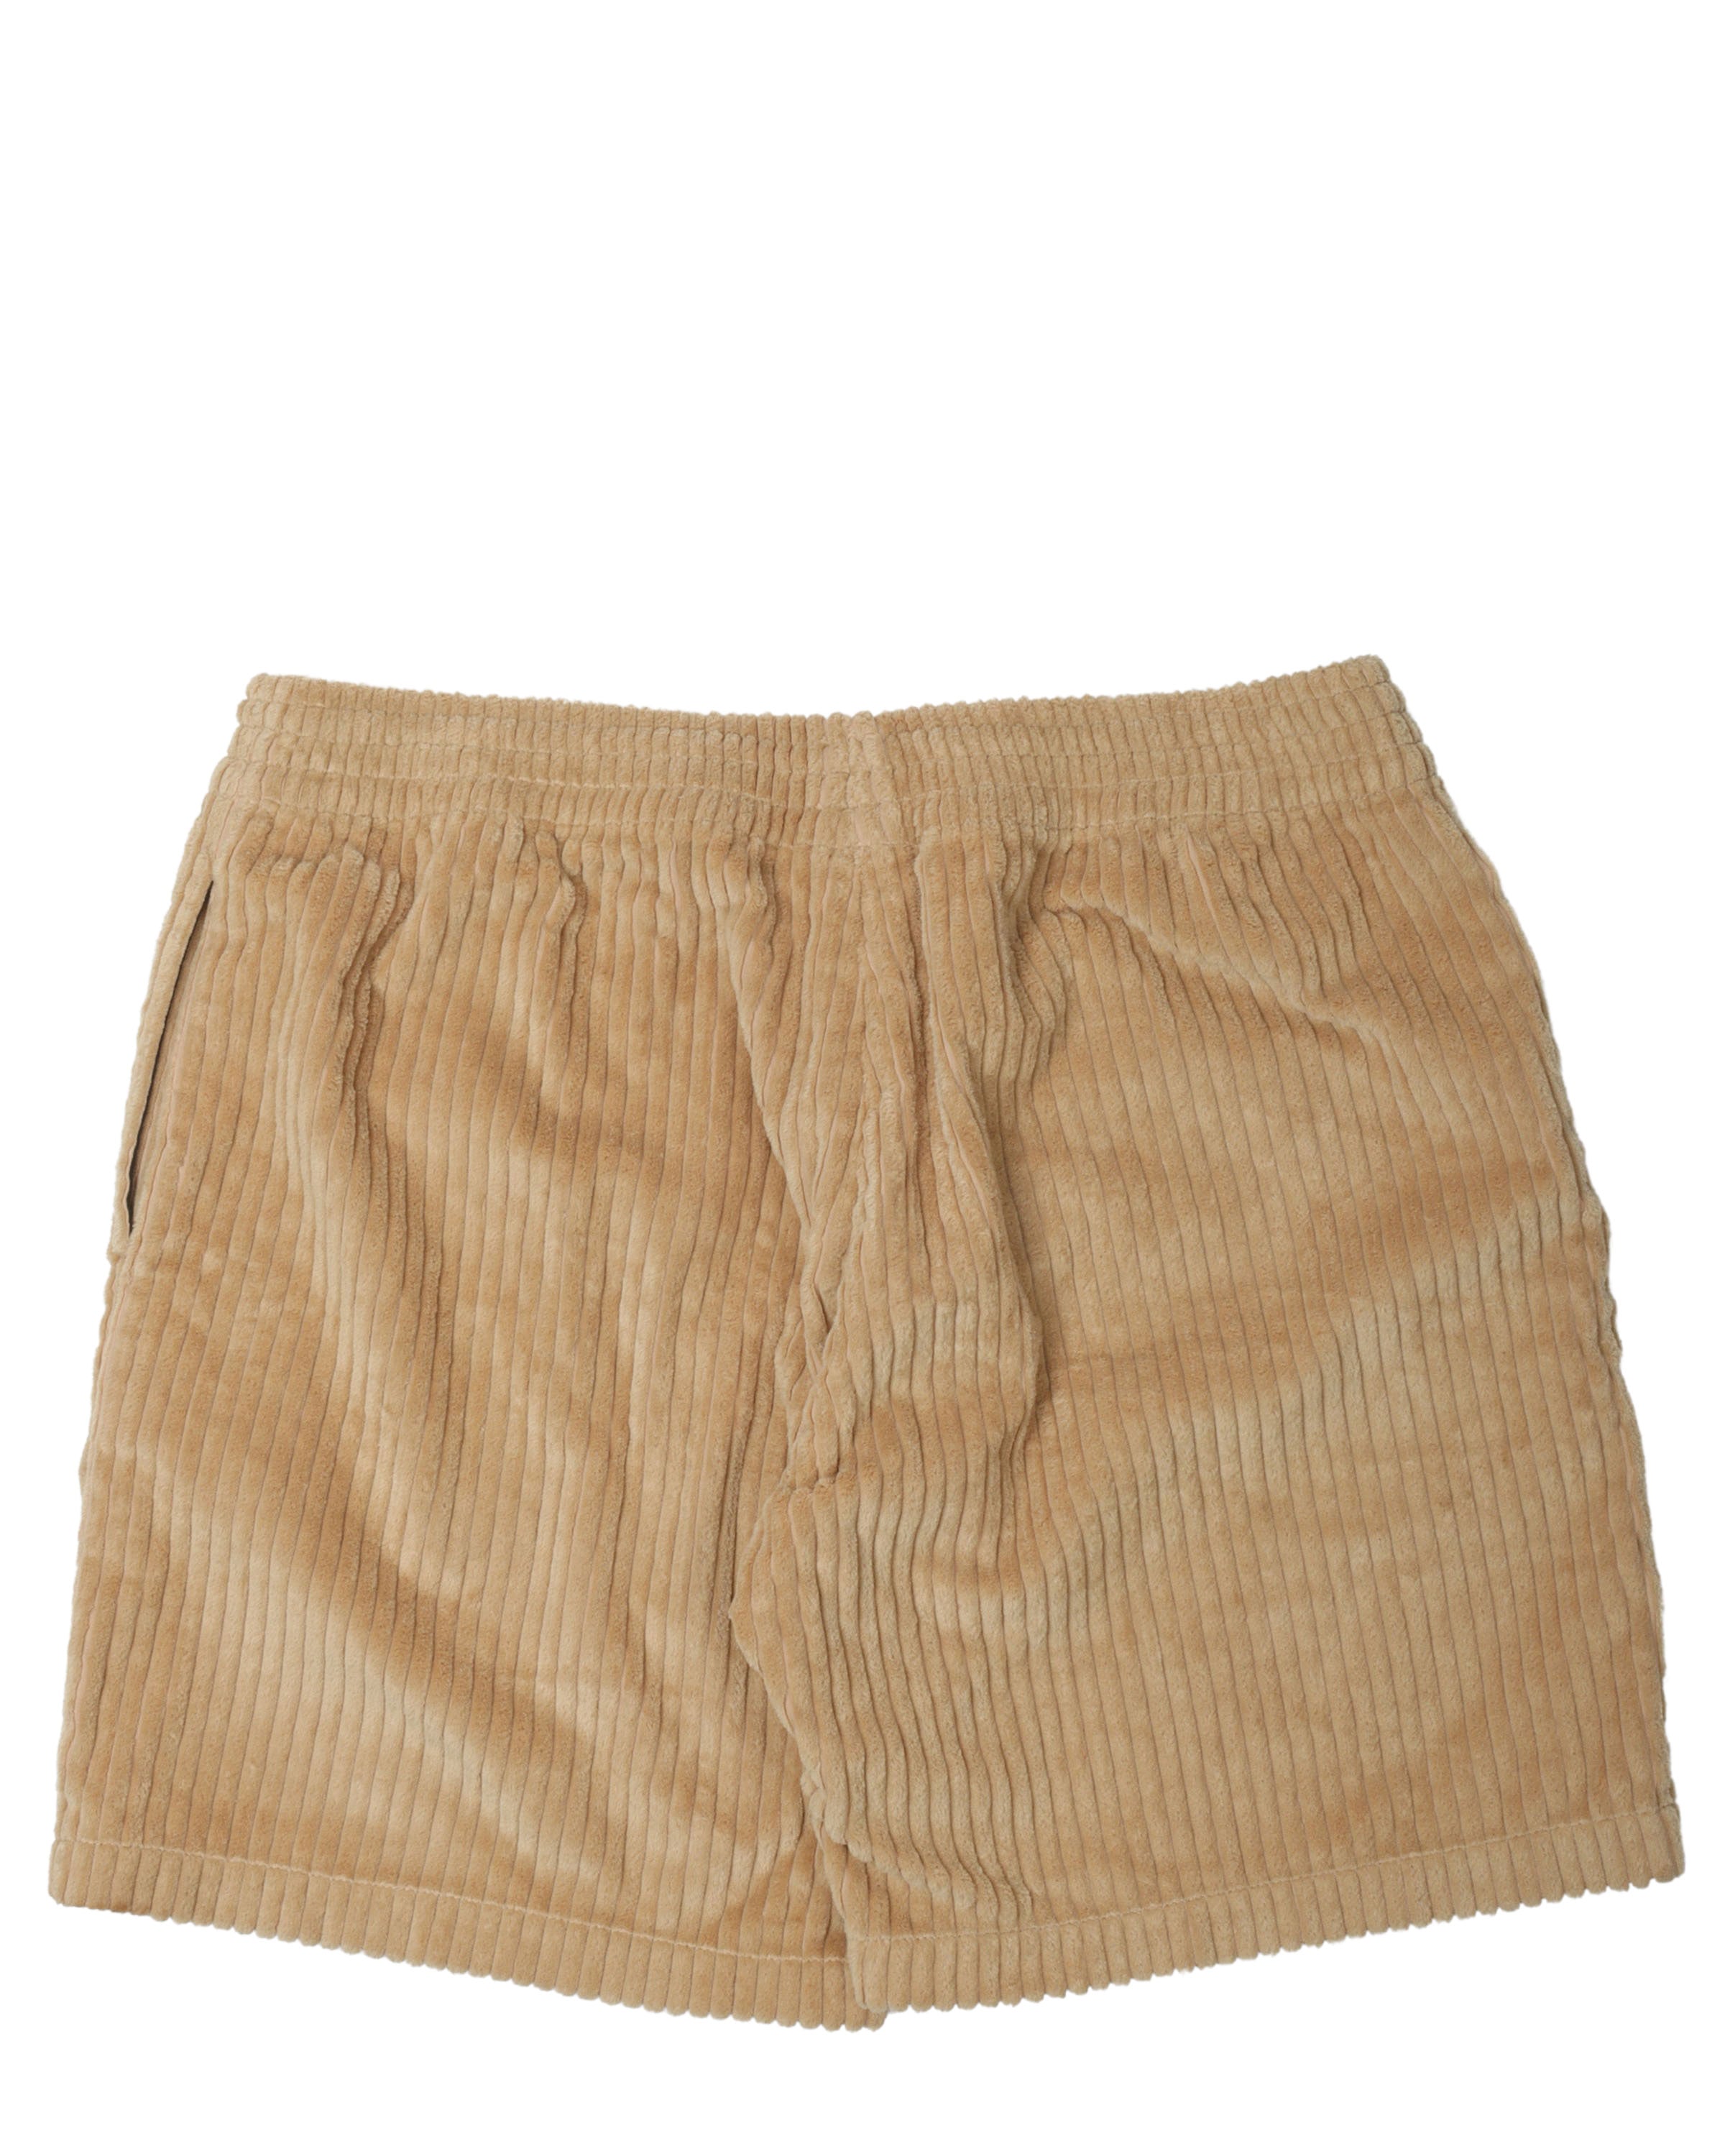 Matty Boy Corduroy Chomper Patch Shorts